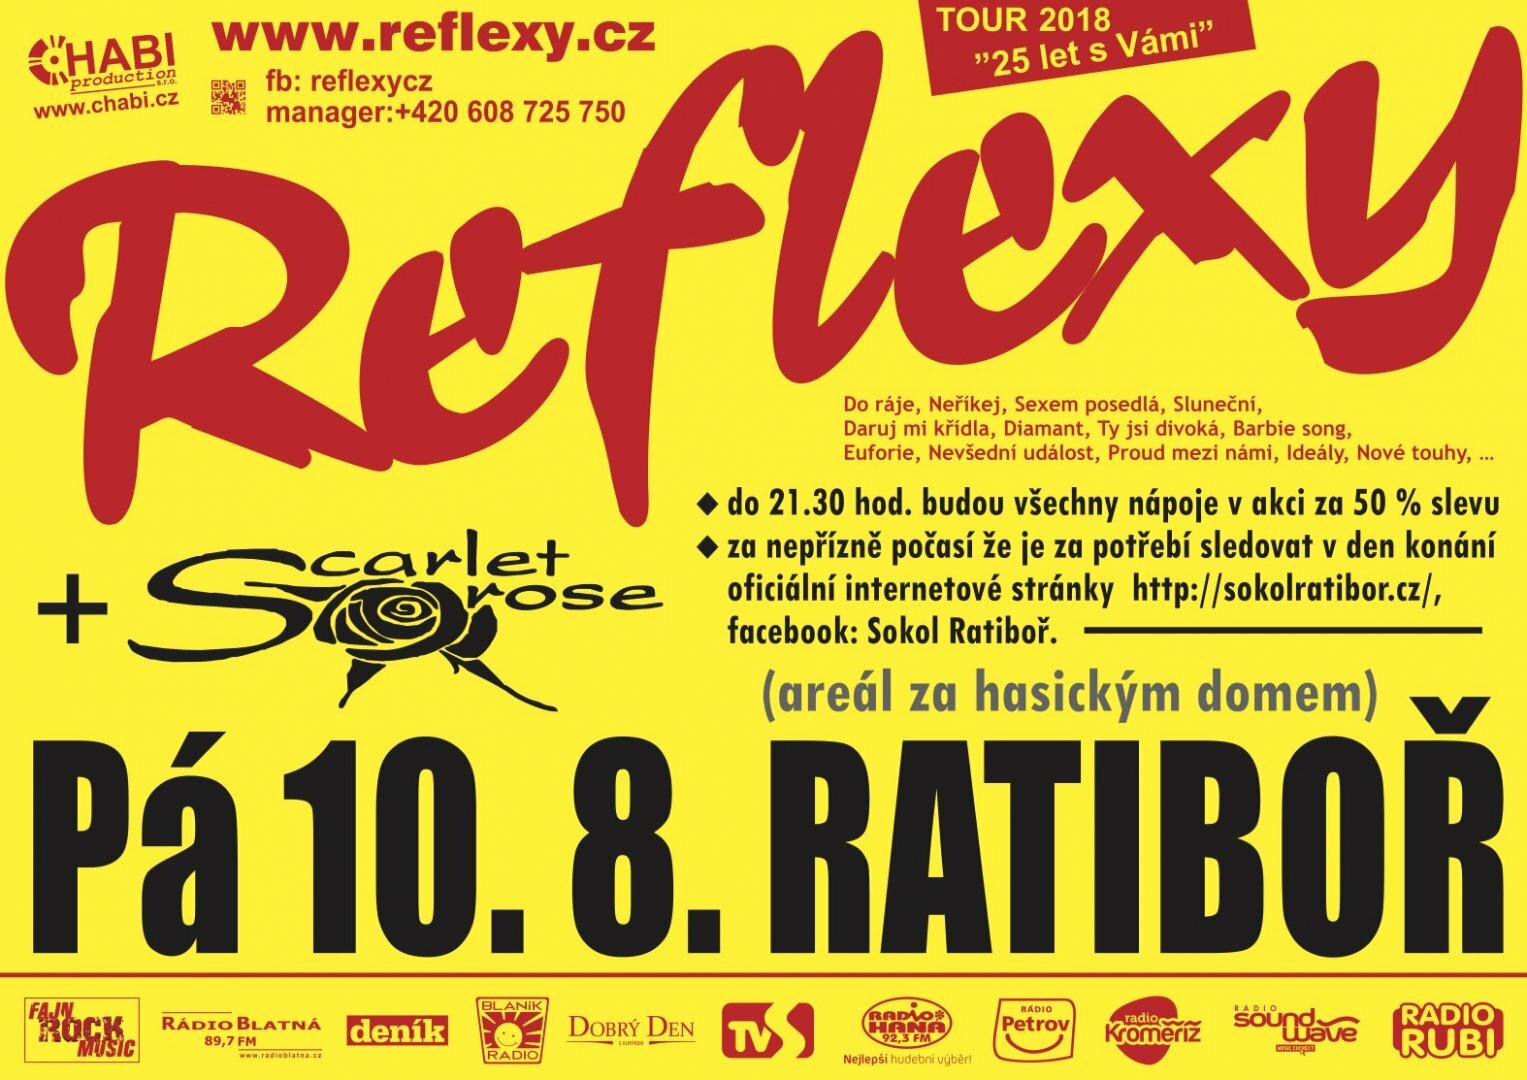 Plakát Zábava s Reflexy